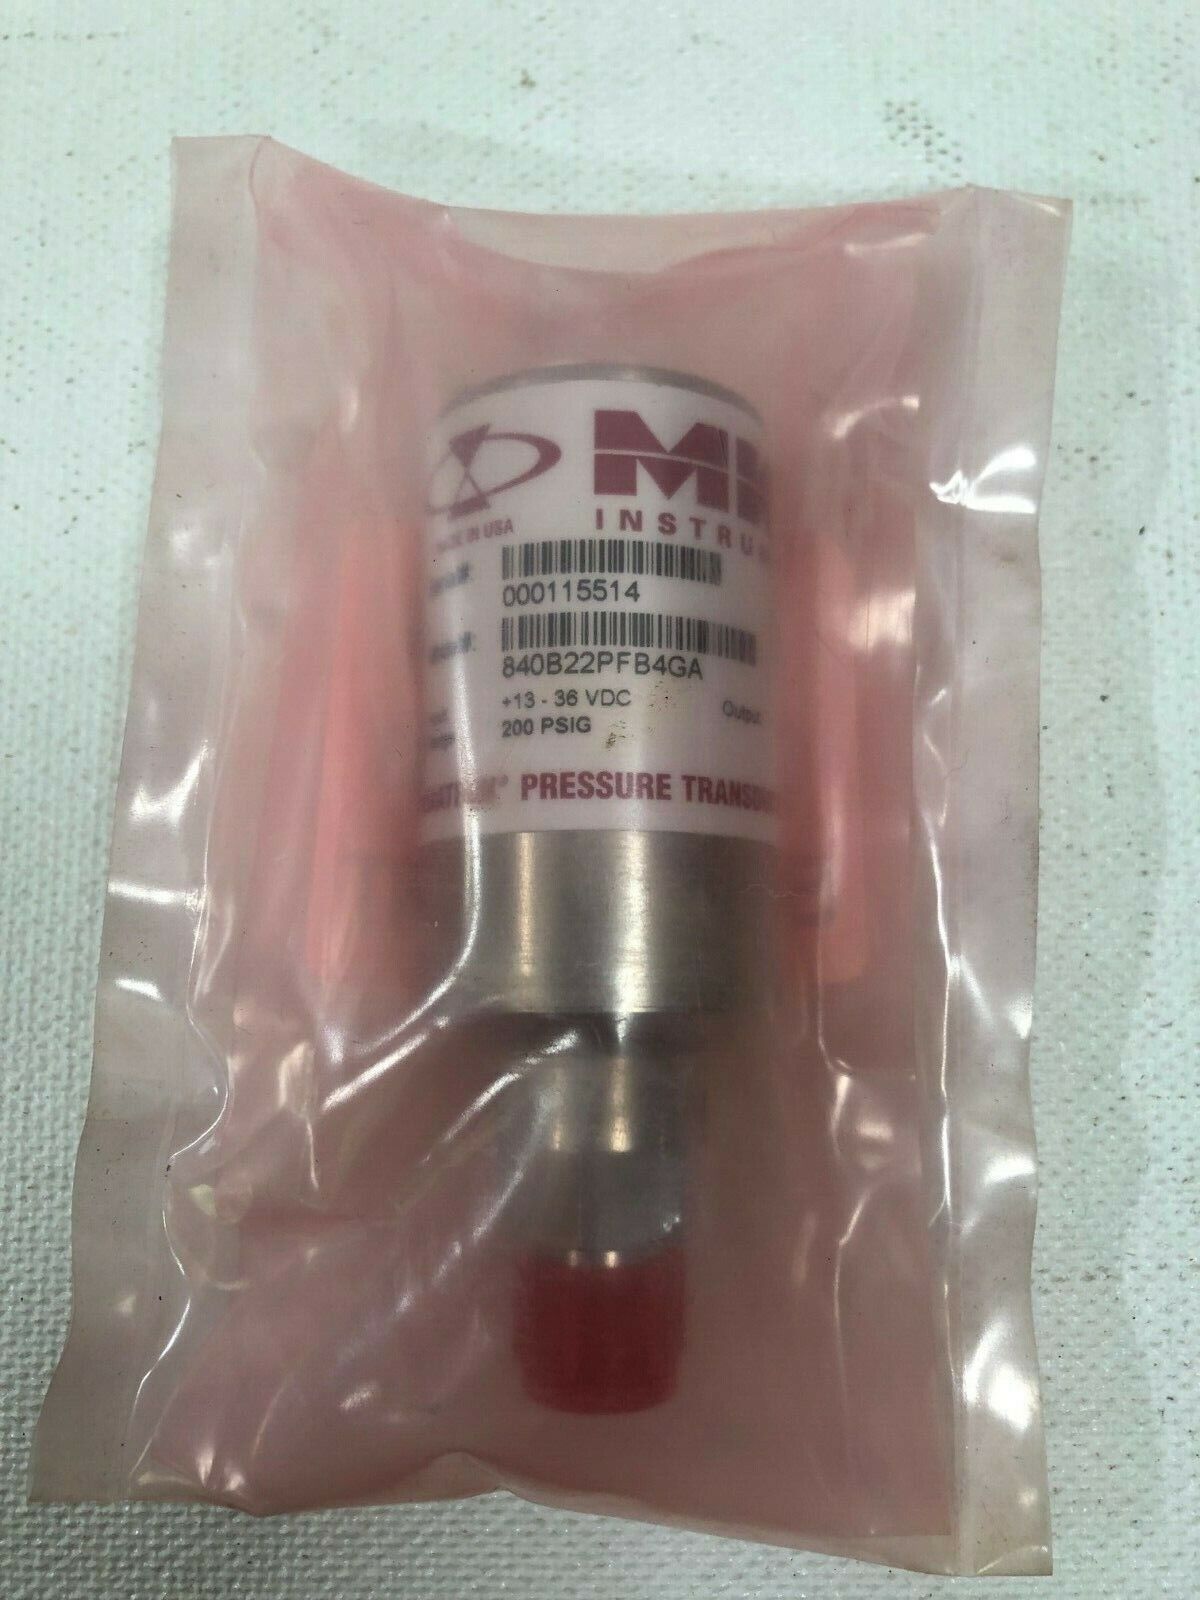 MKS Instruments 840B22PFB4GA Pressure Transducer